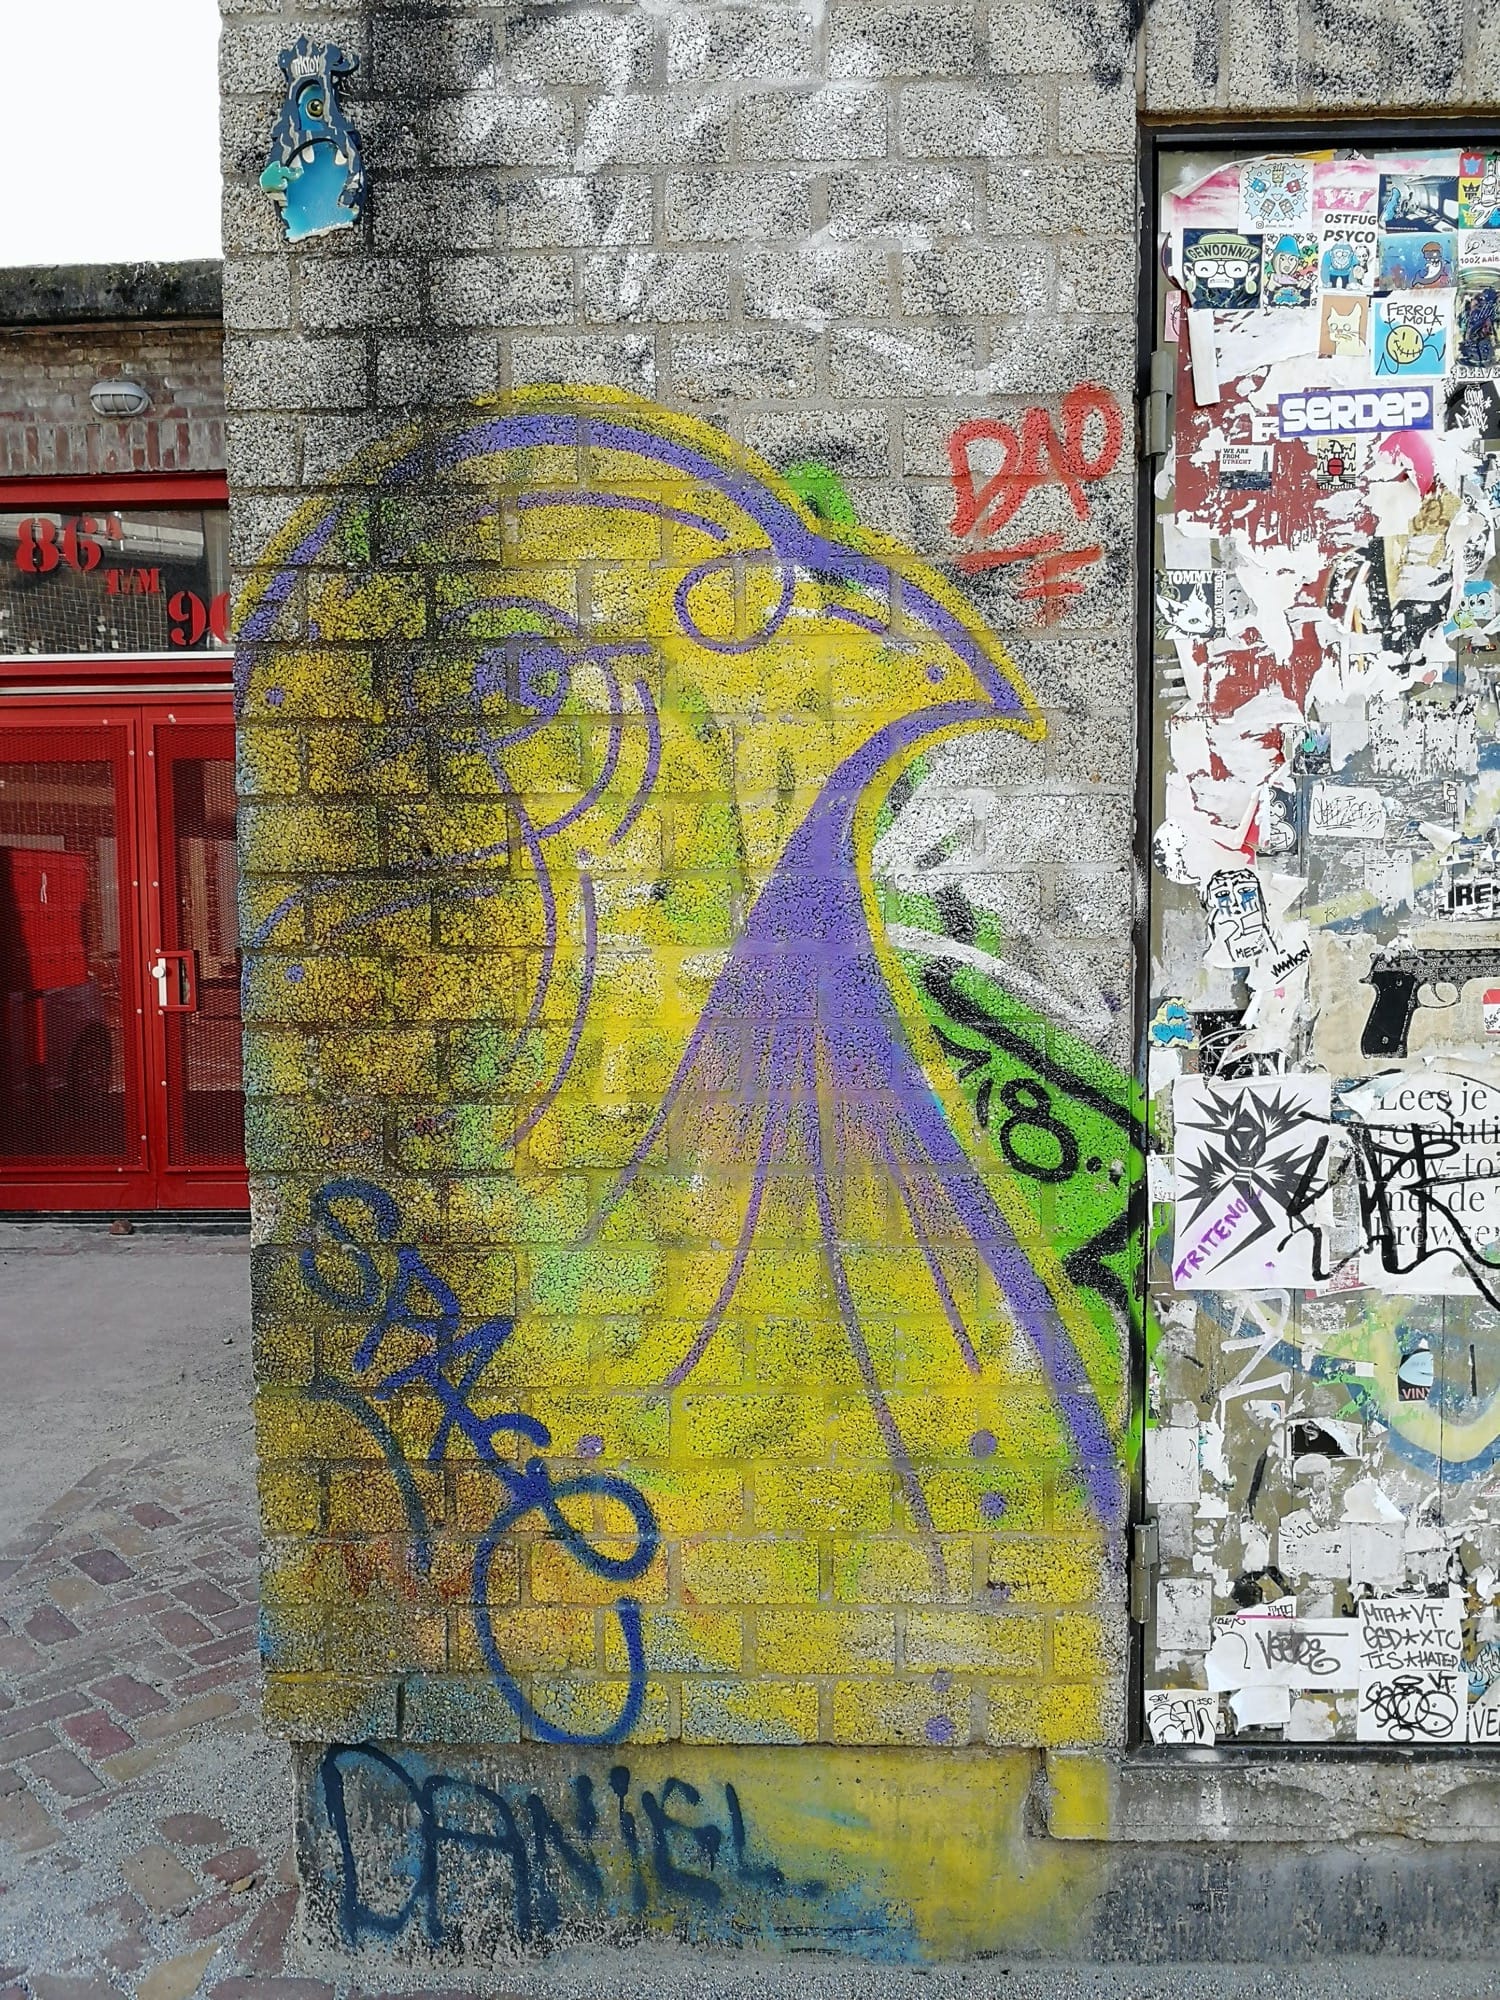 Graffiti 1707  captured by Rabot in Amsterdam Netherlands